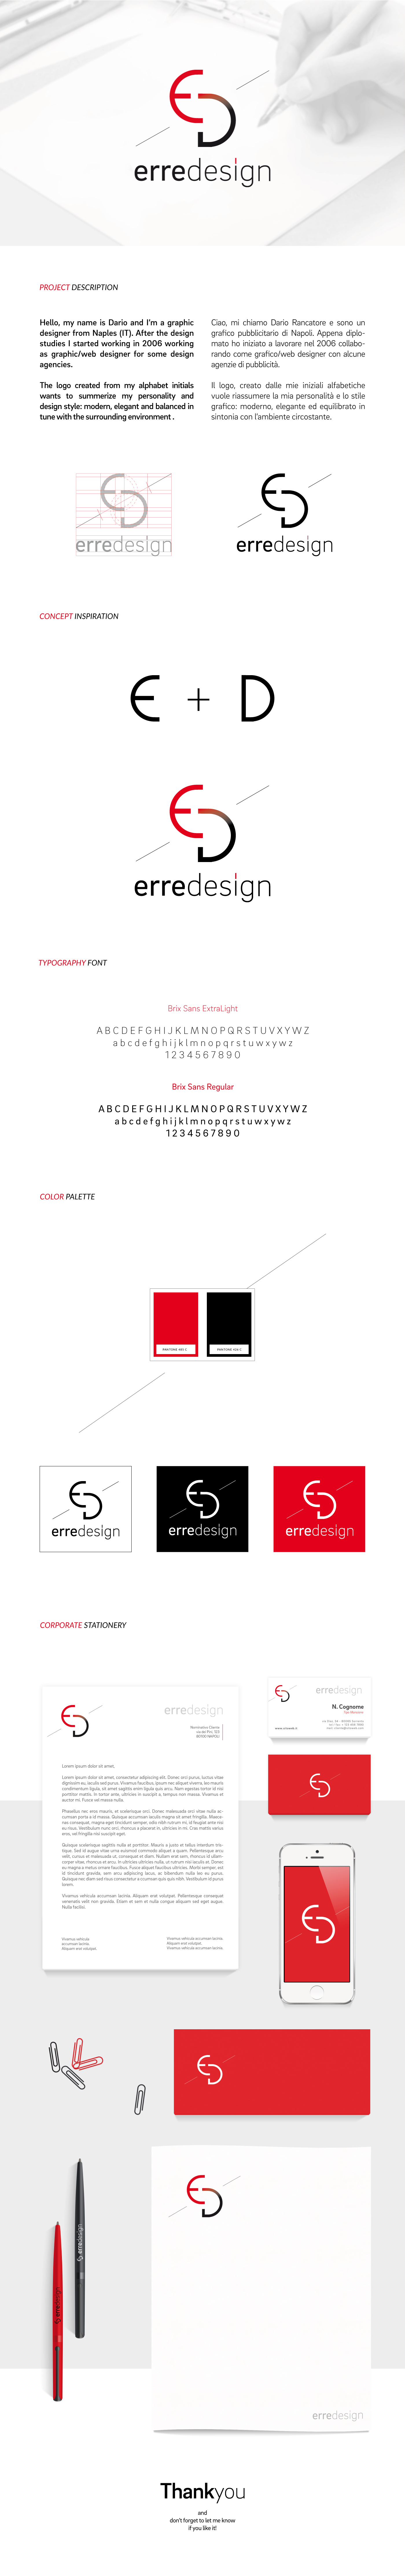 logo logos portfolio personal branding brand visual identity Corporate Identity Mockup minimalist creative design pantone Logo Design